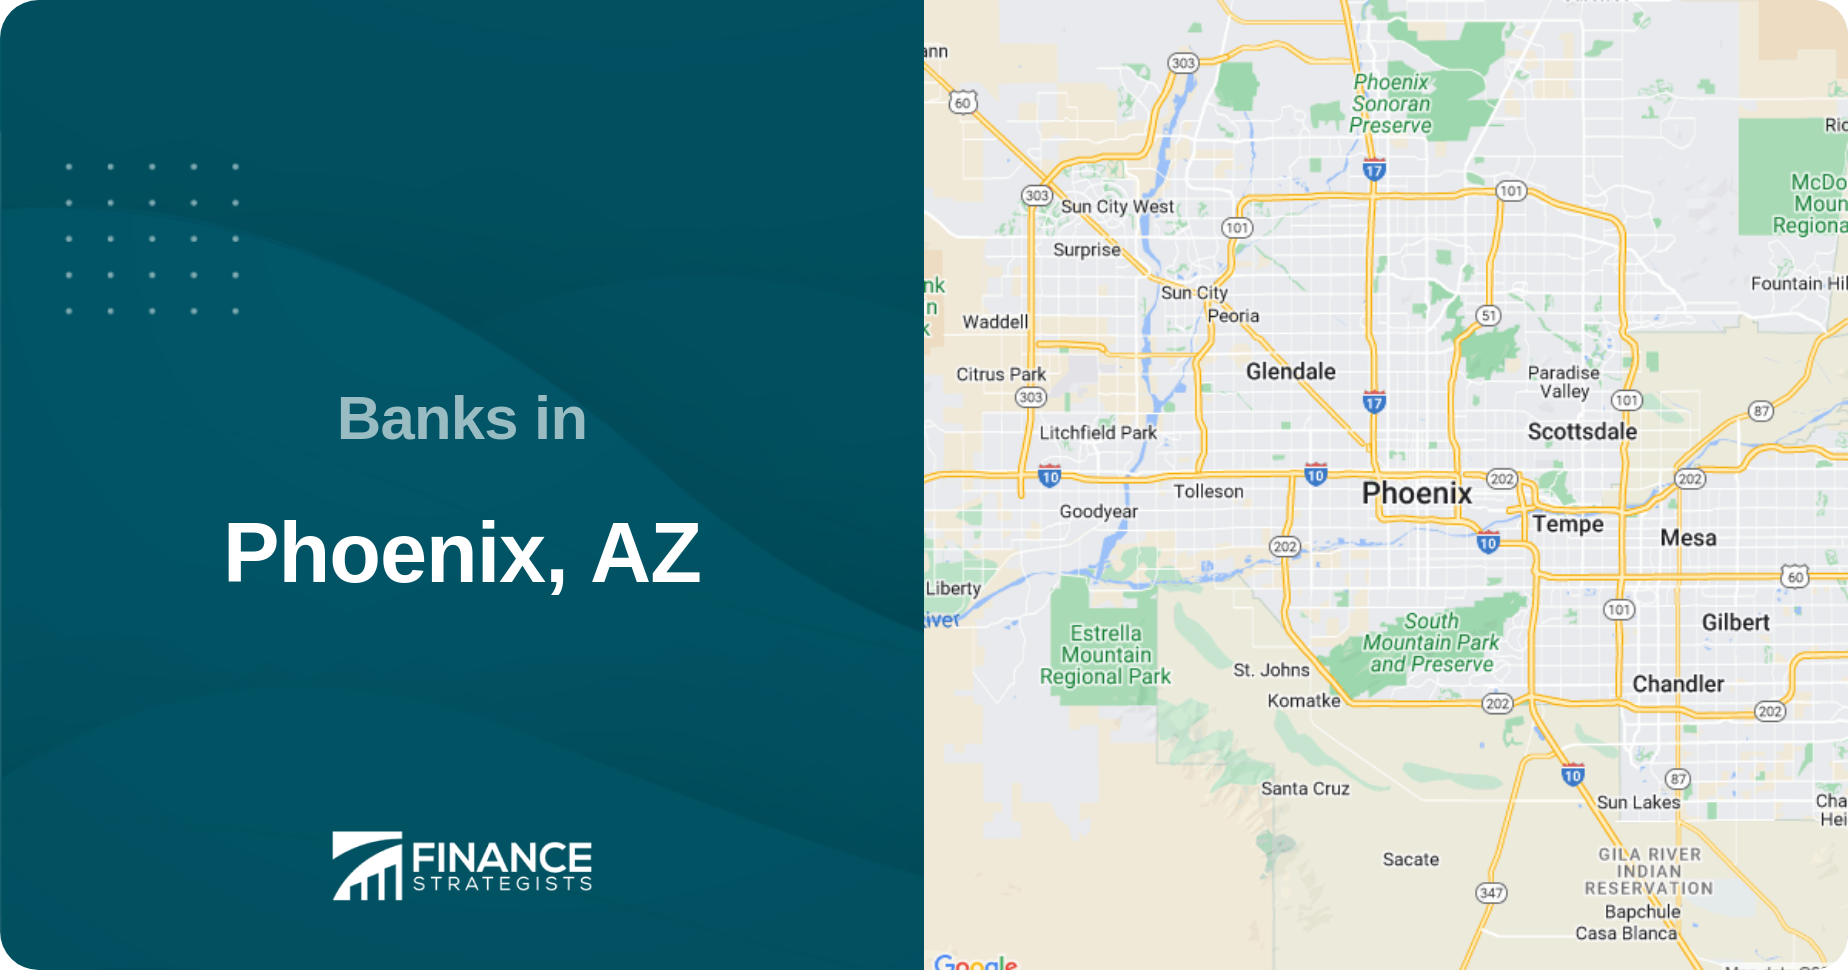 Banks in Phoenix, AZ